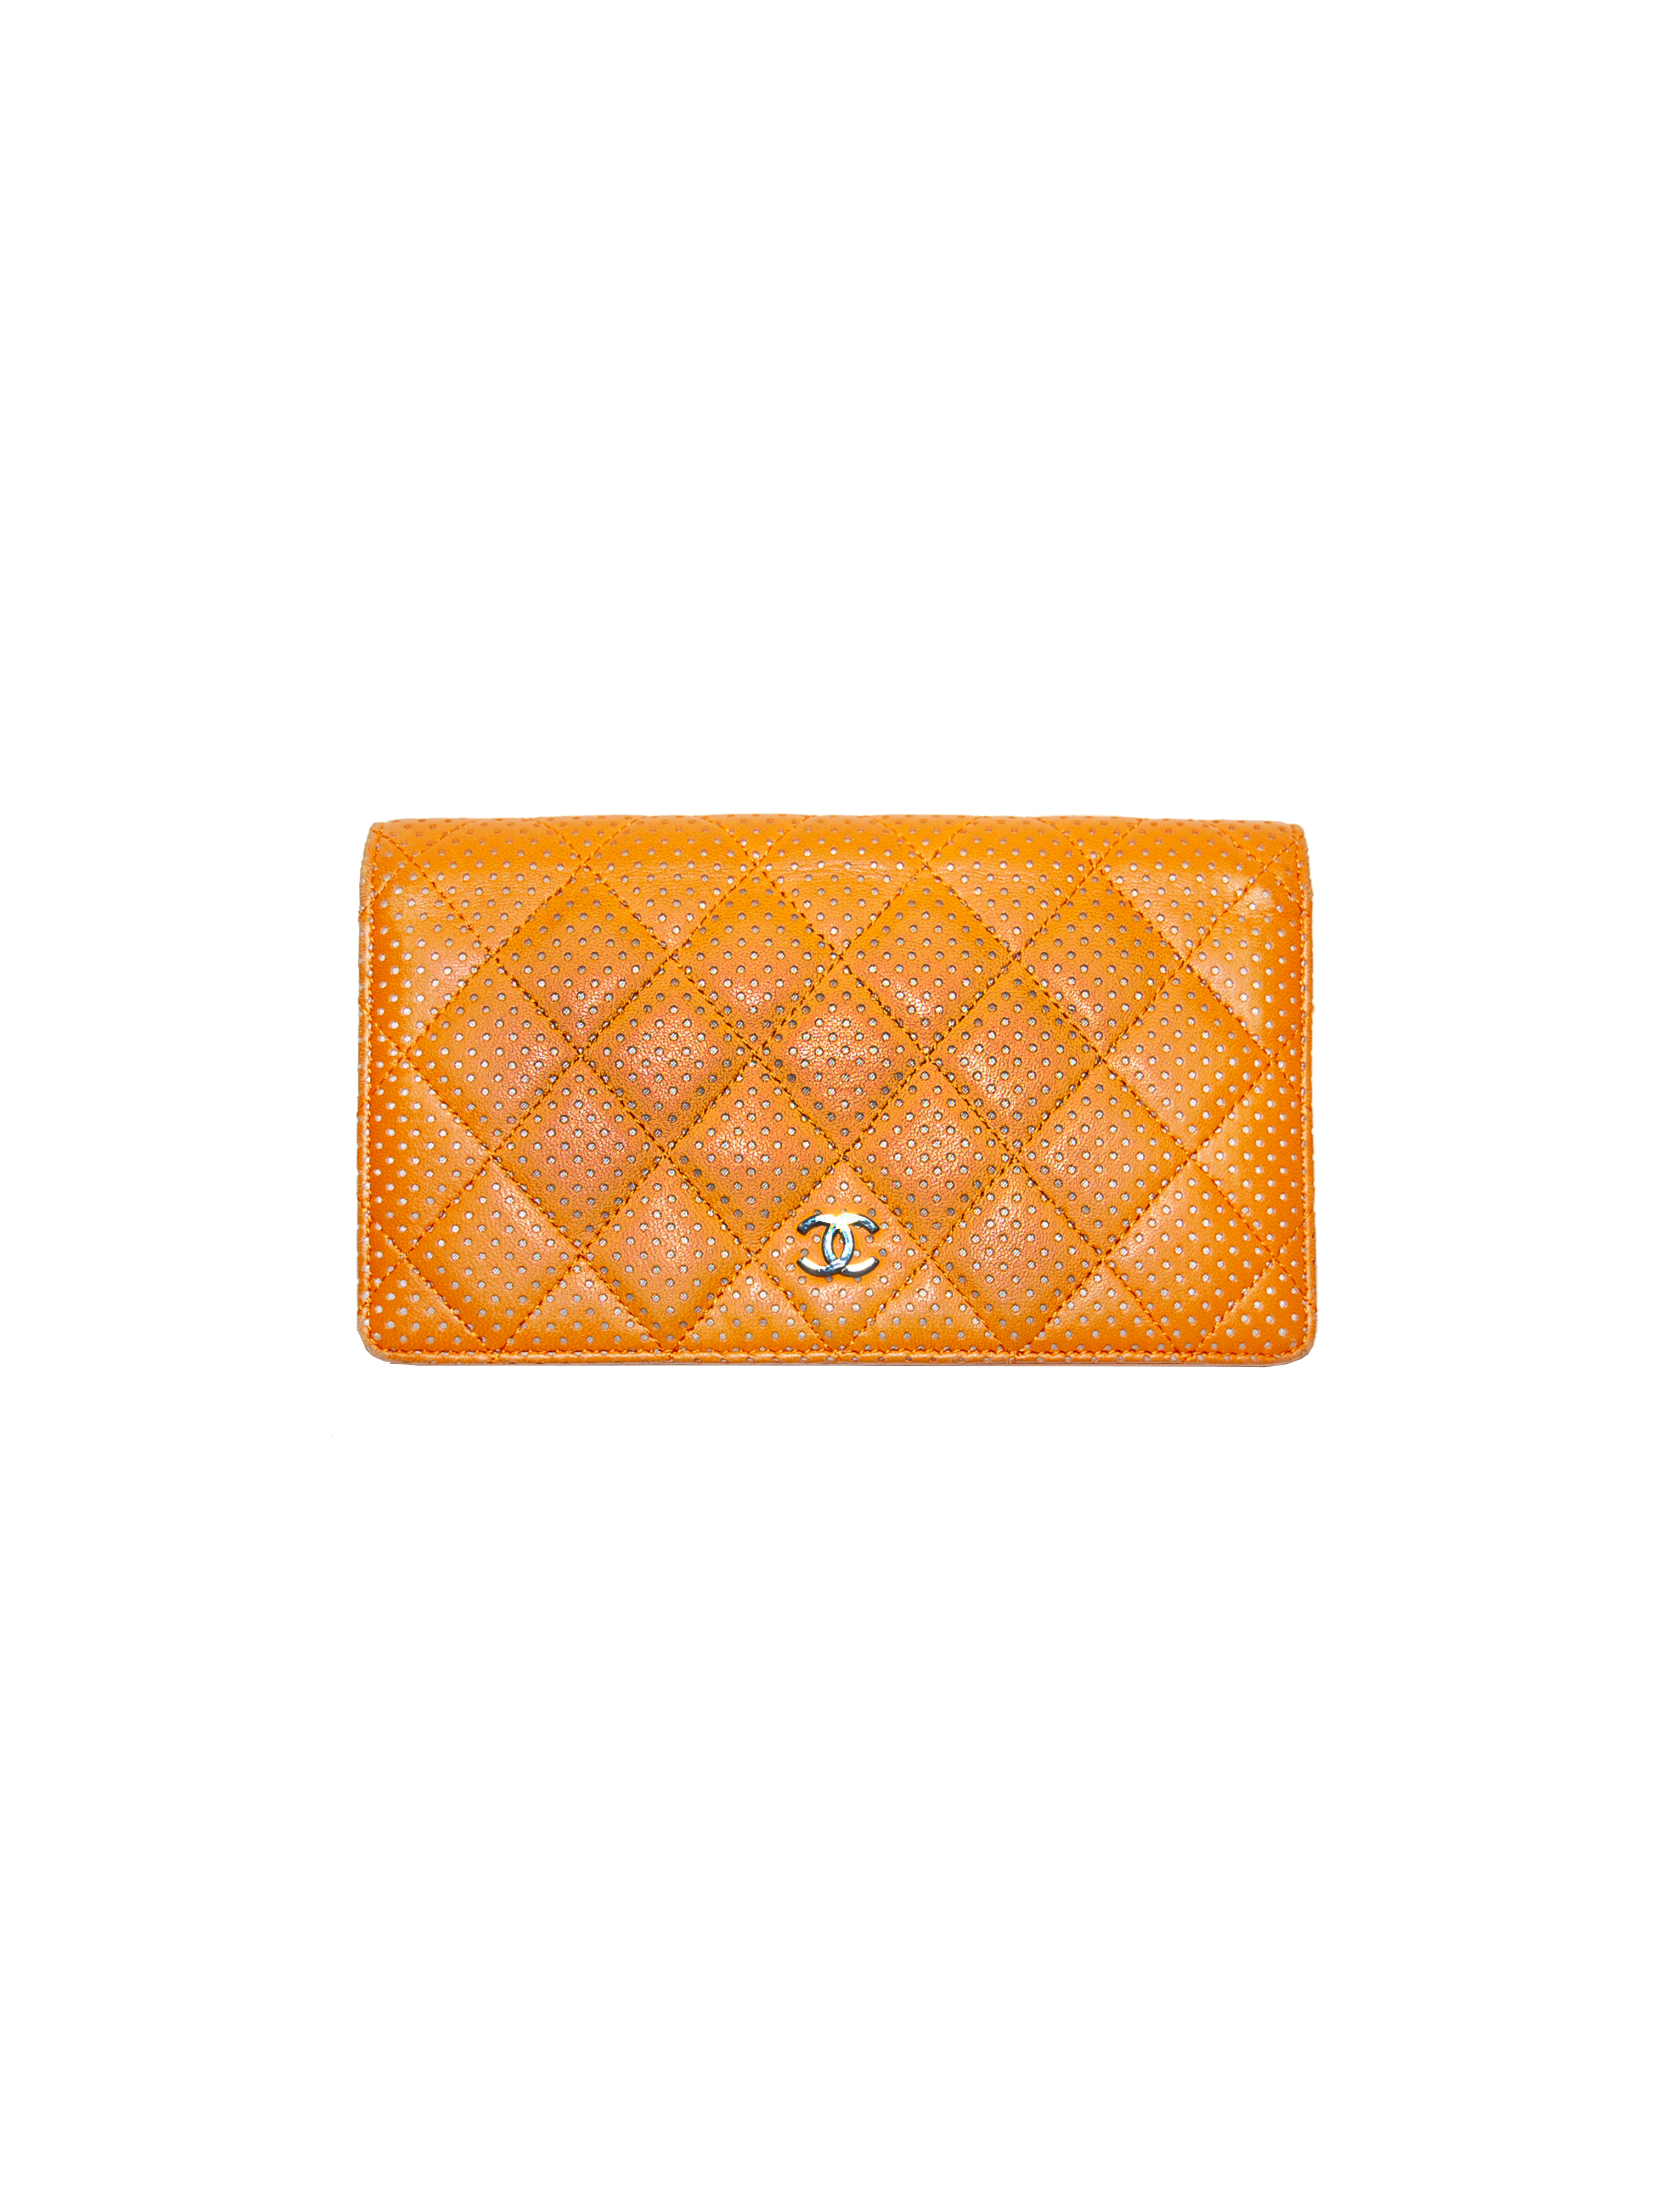 Chanel 2000s Orange Perforated Bi-Fold Wallet